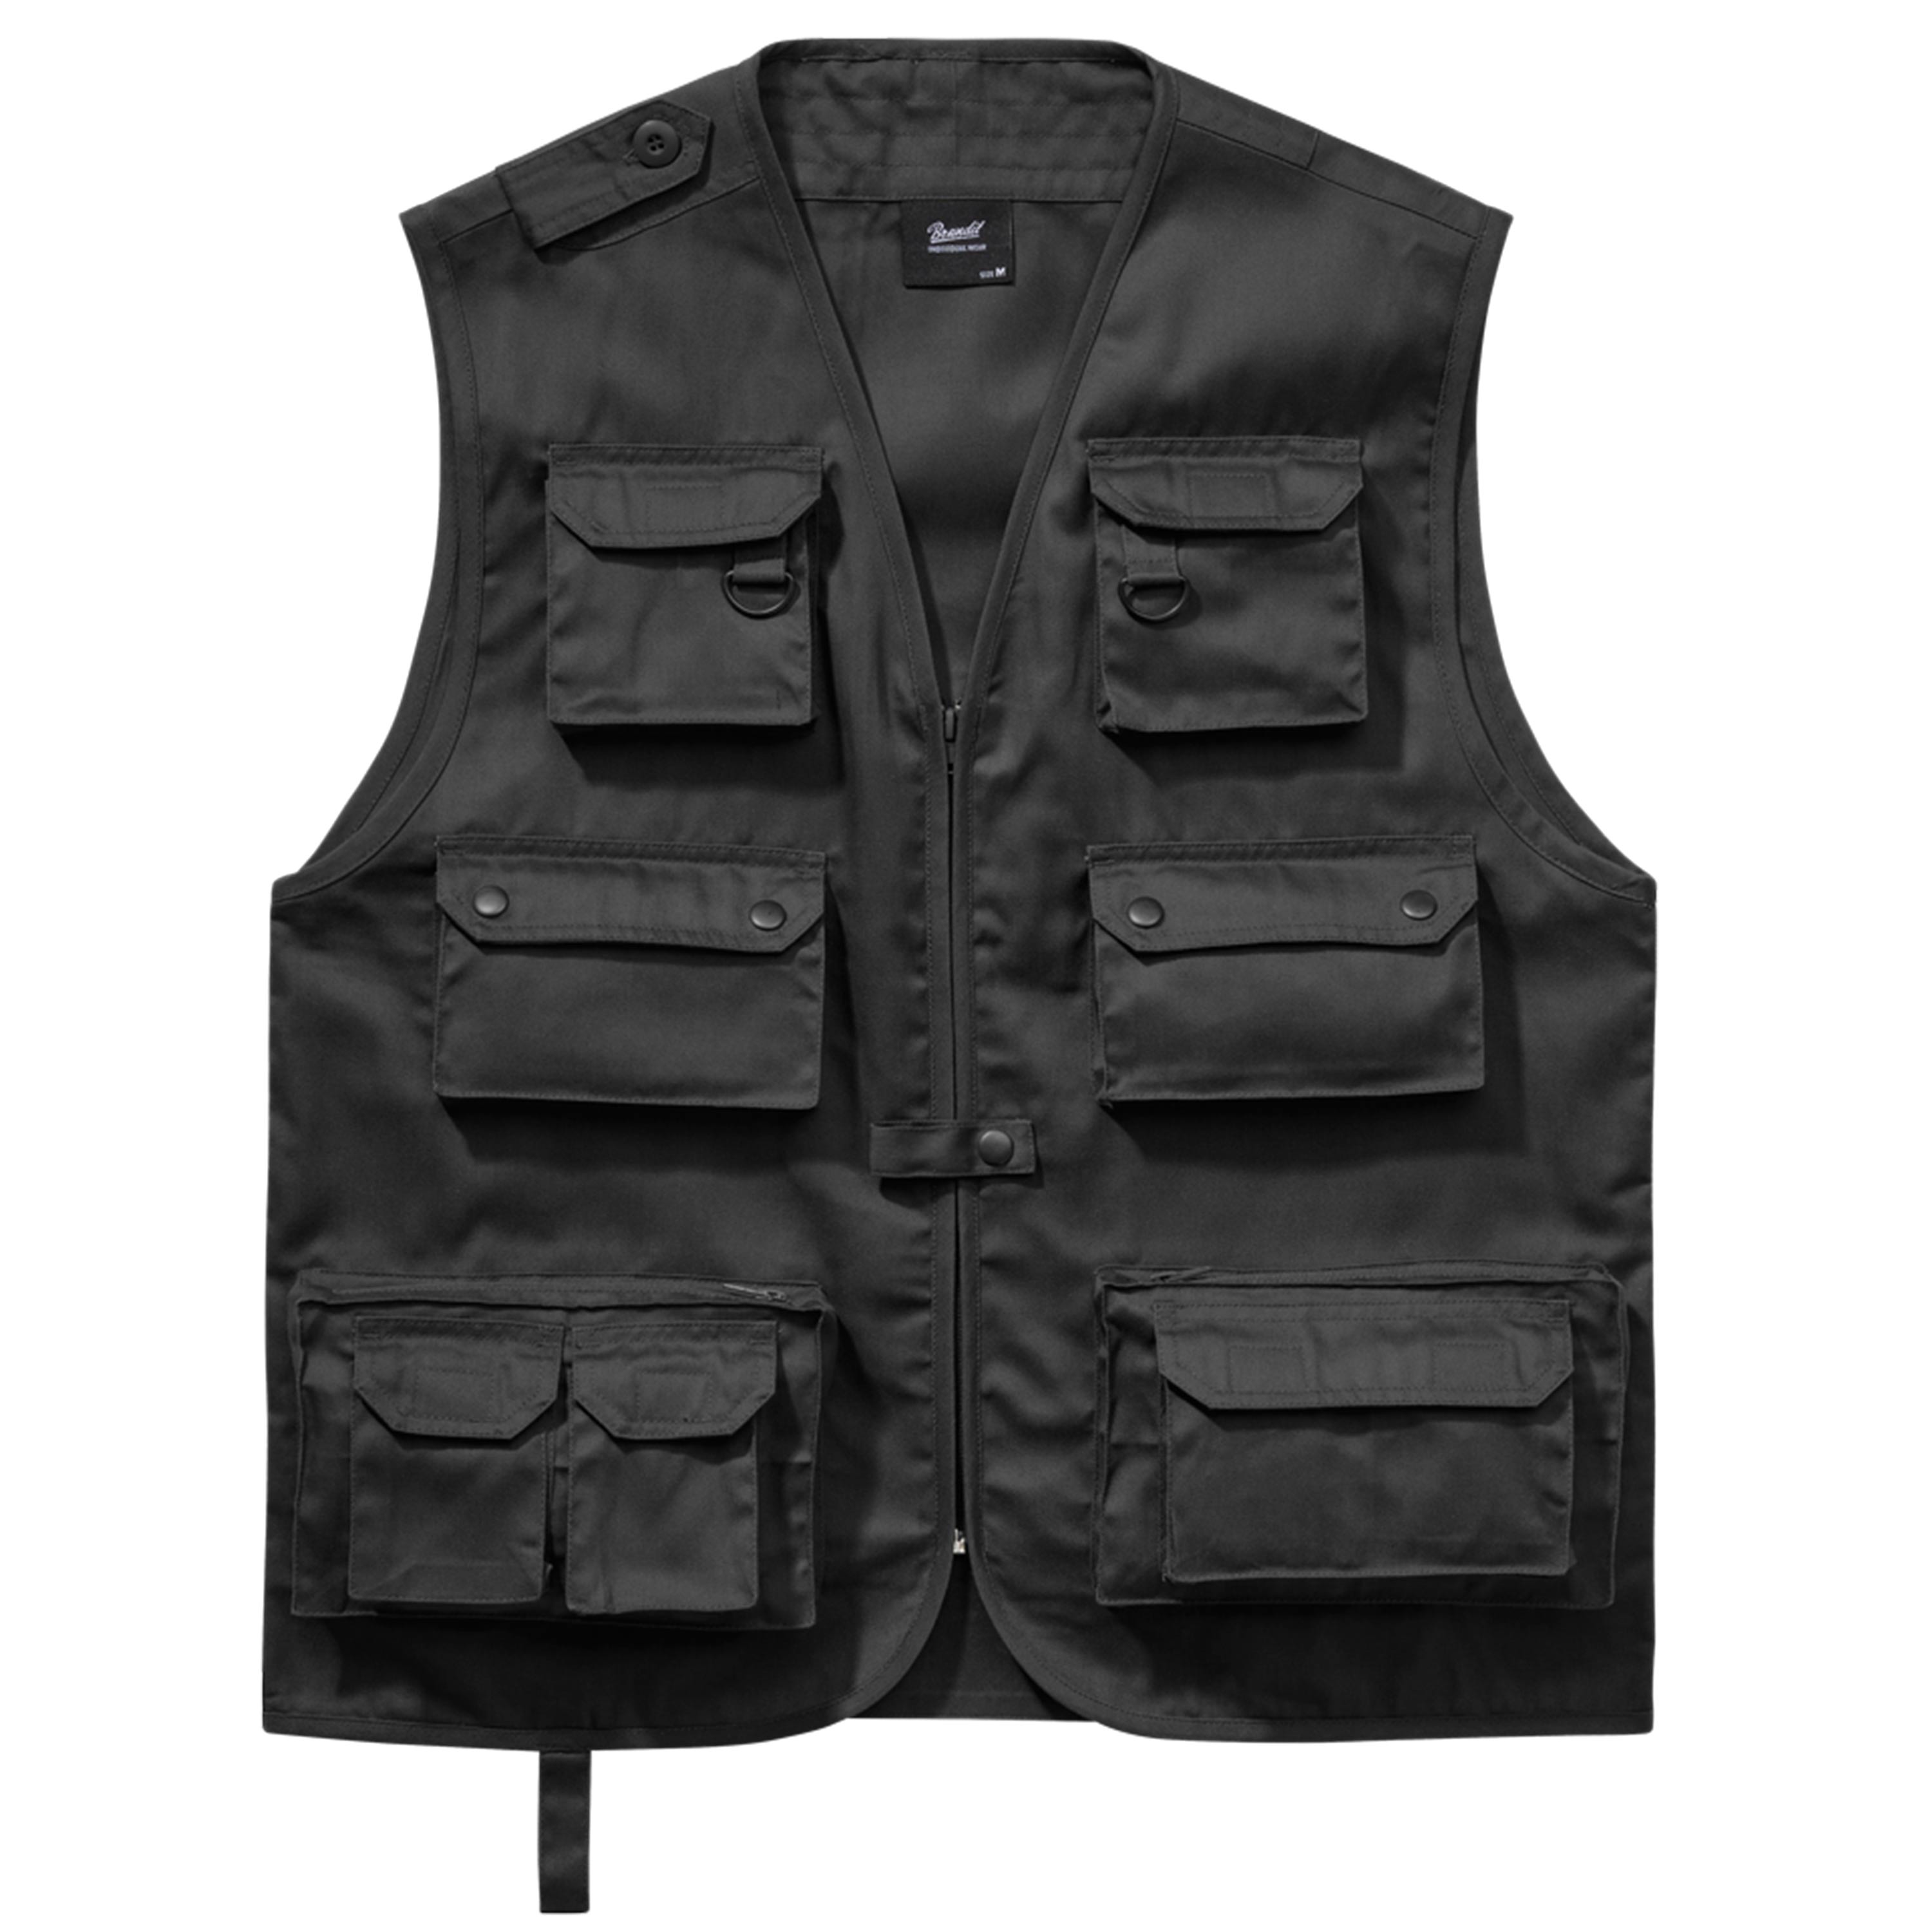 Brandit Purchase by Hunting black Vest ASMC the